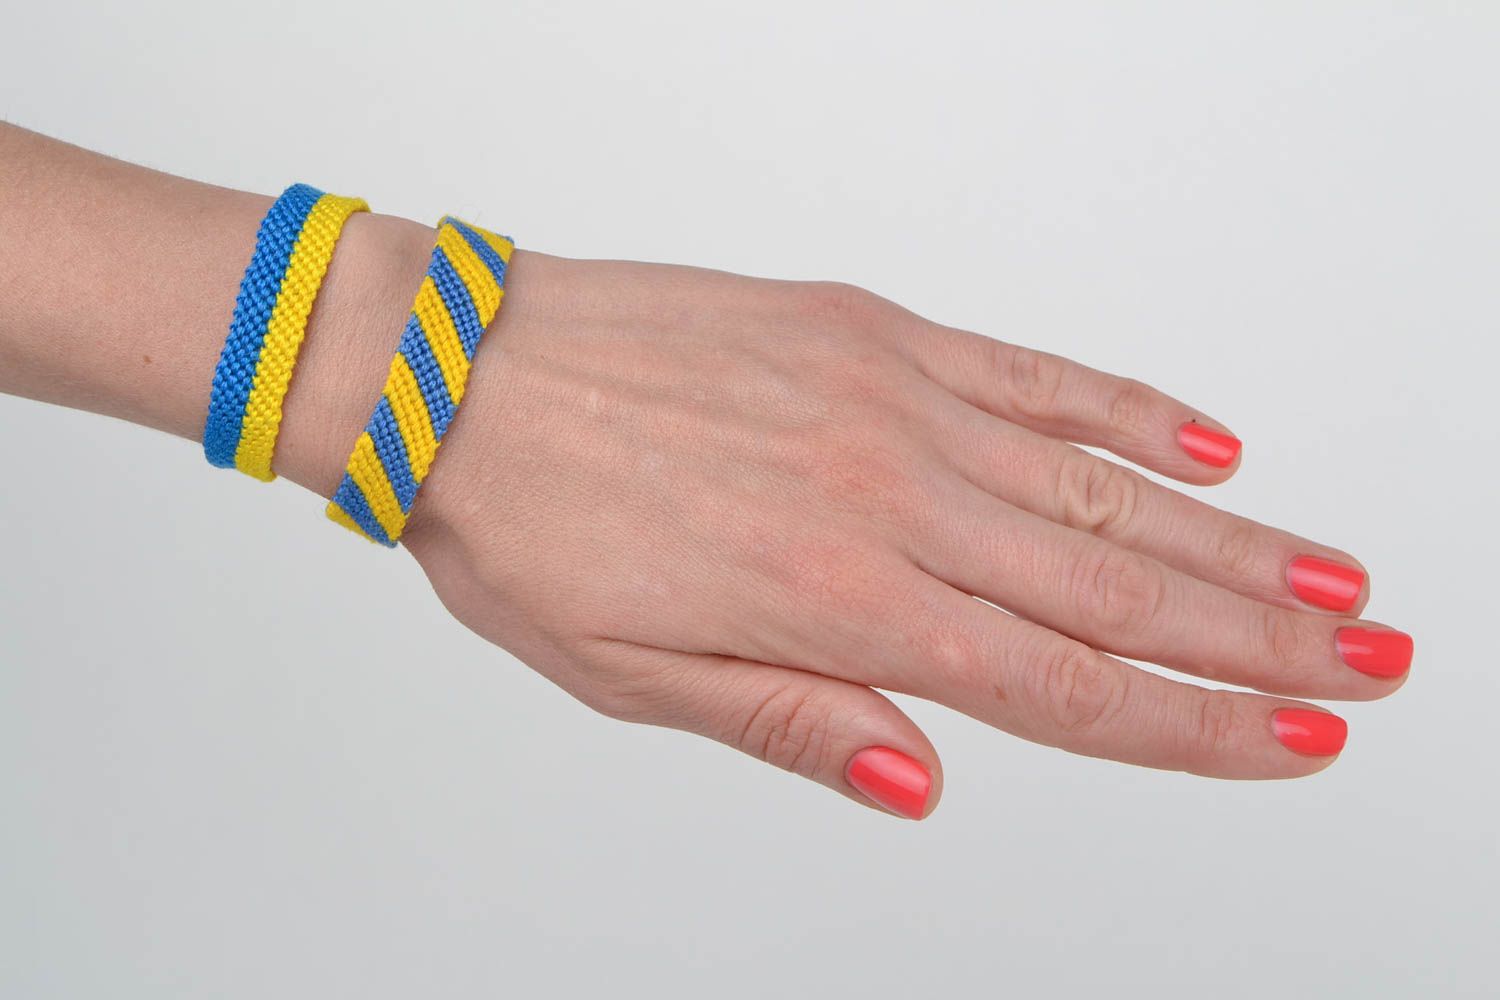 Ensemble de 2 bracelets tressés en fils moulinés jaune-bleu faits main macramé photo 2